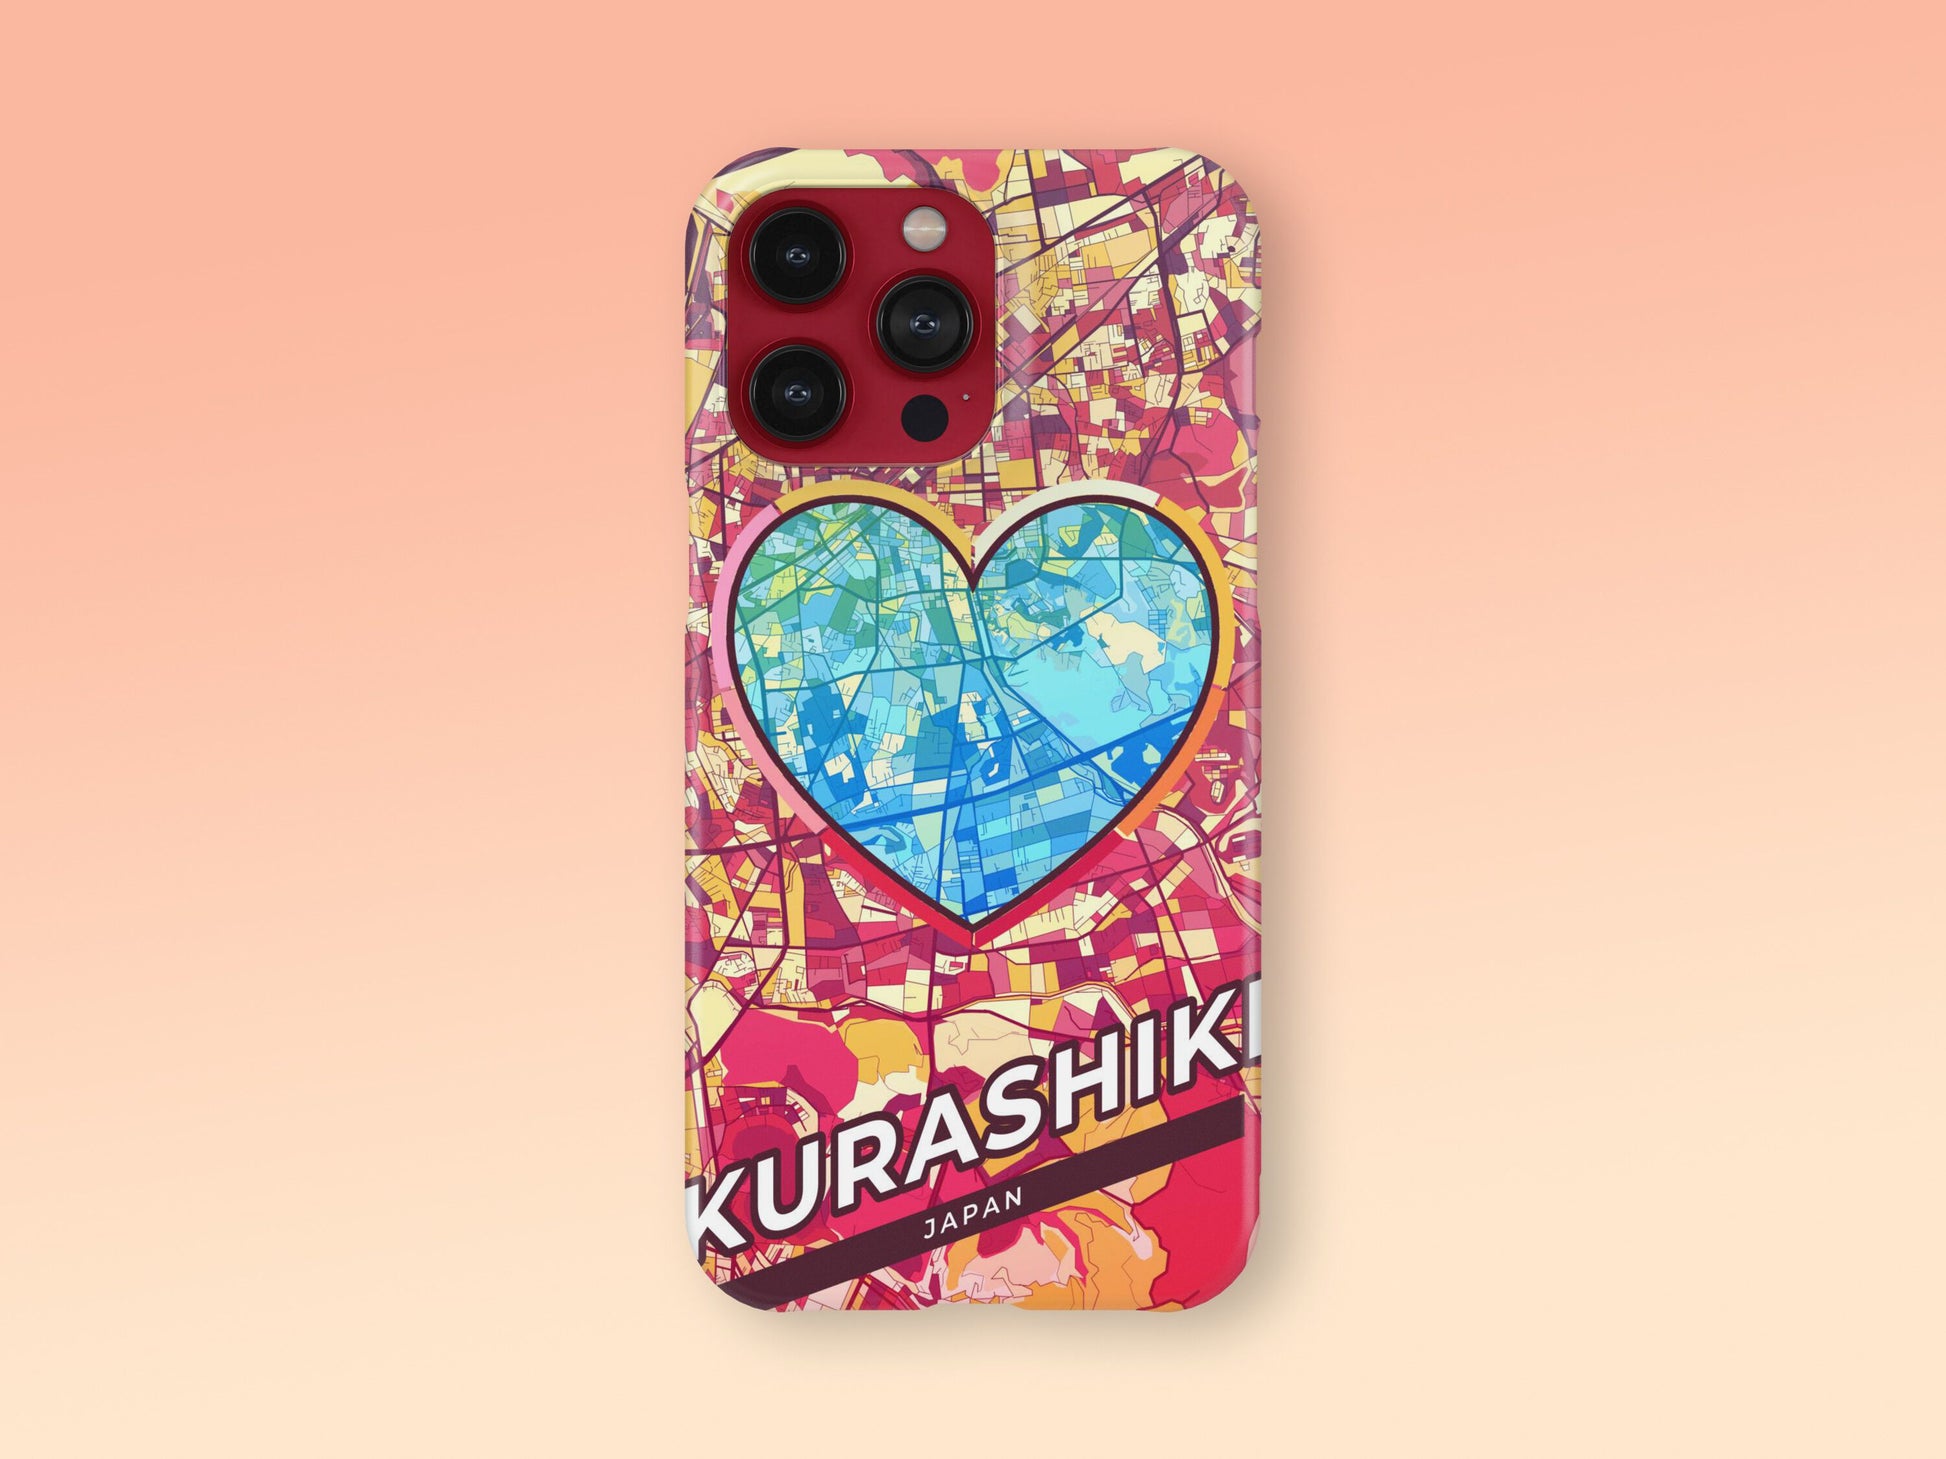 Kurashiki Japan slim phone case with colorful icon. Birthday, wedding or housewarming gift. Couple match cases. 2